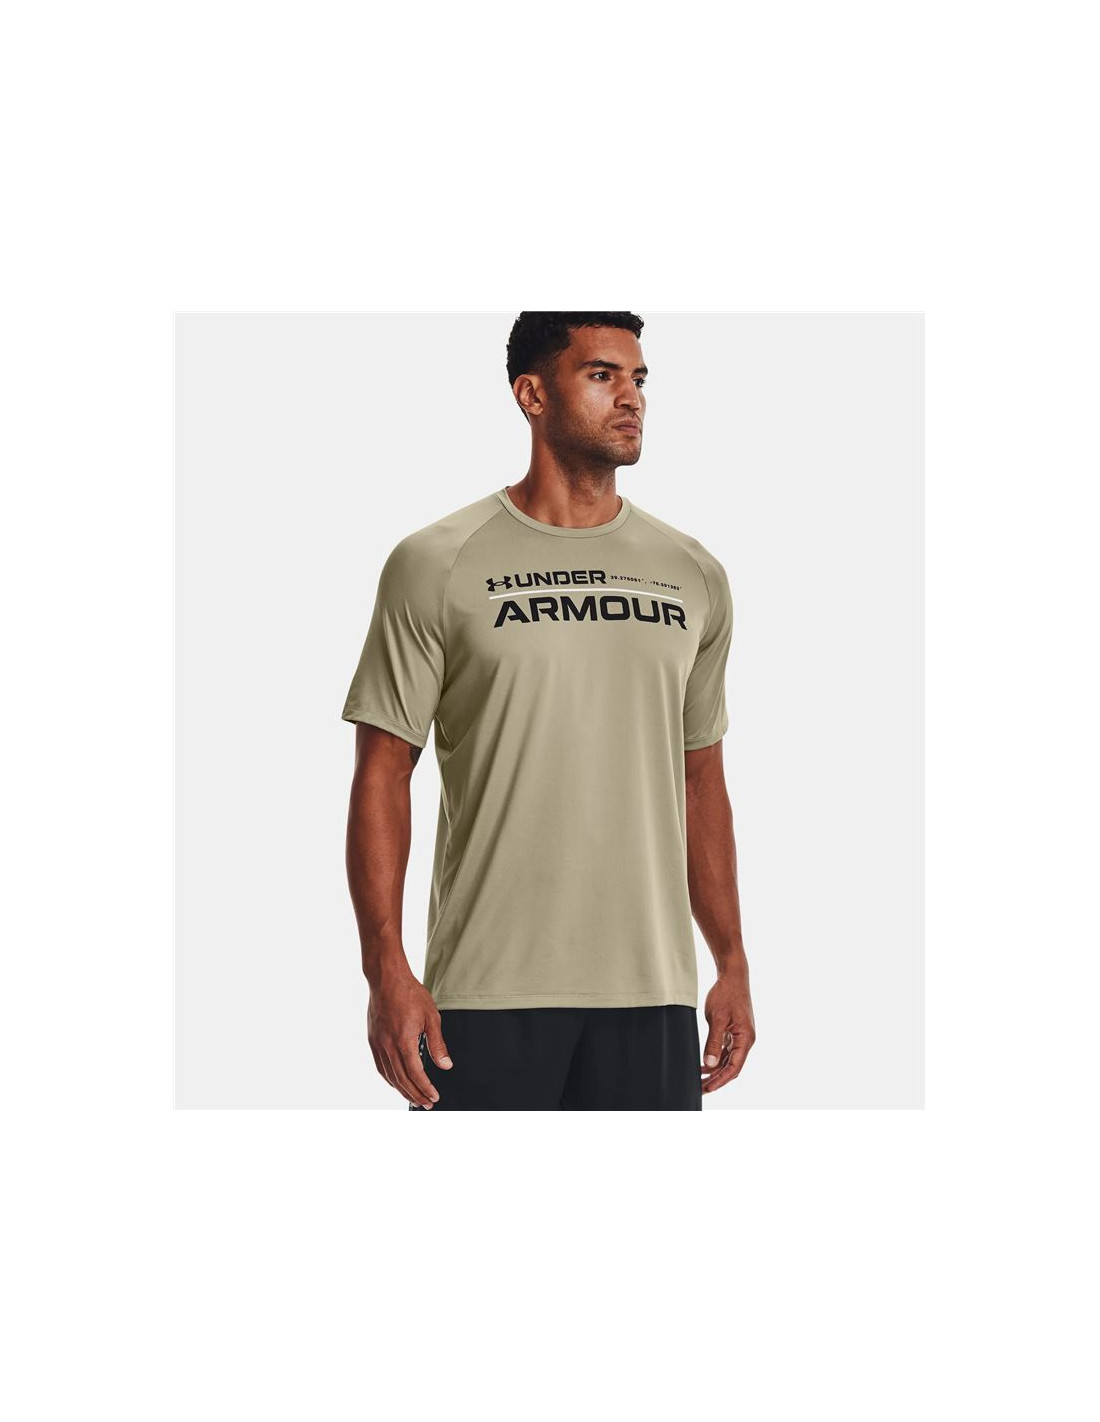 Camiseta manga corta Under Armour, Camisetas deportivas para hombre